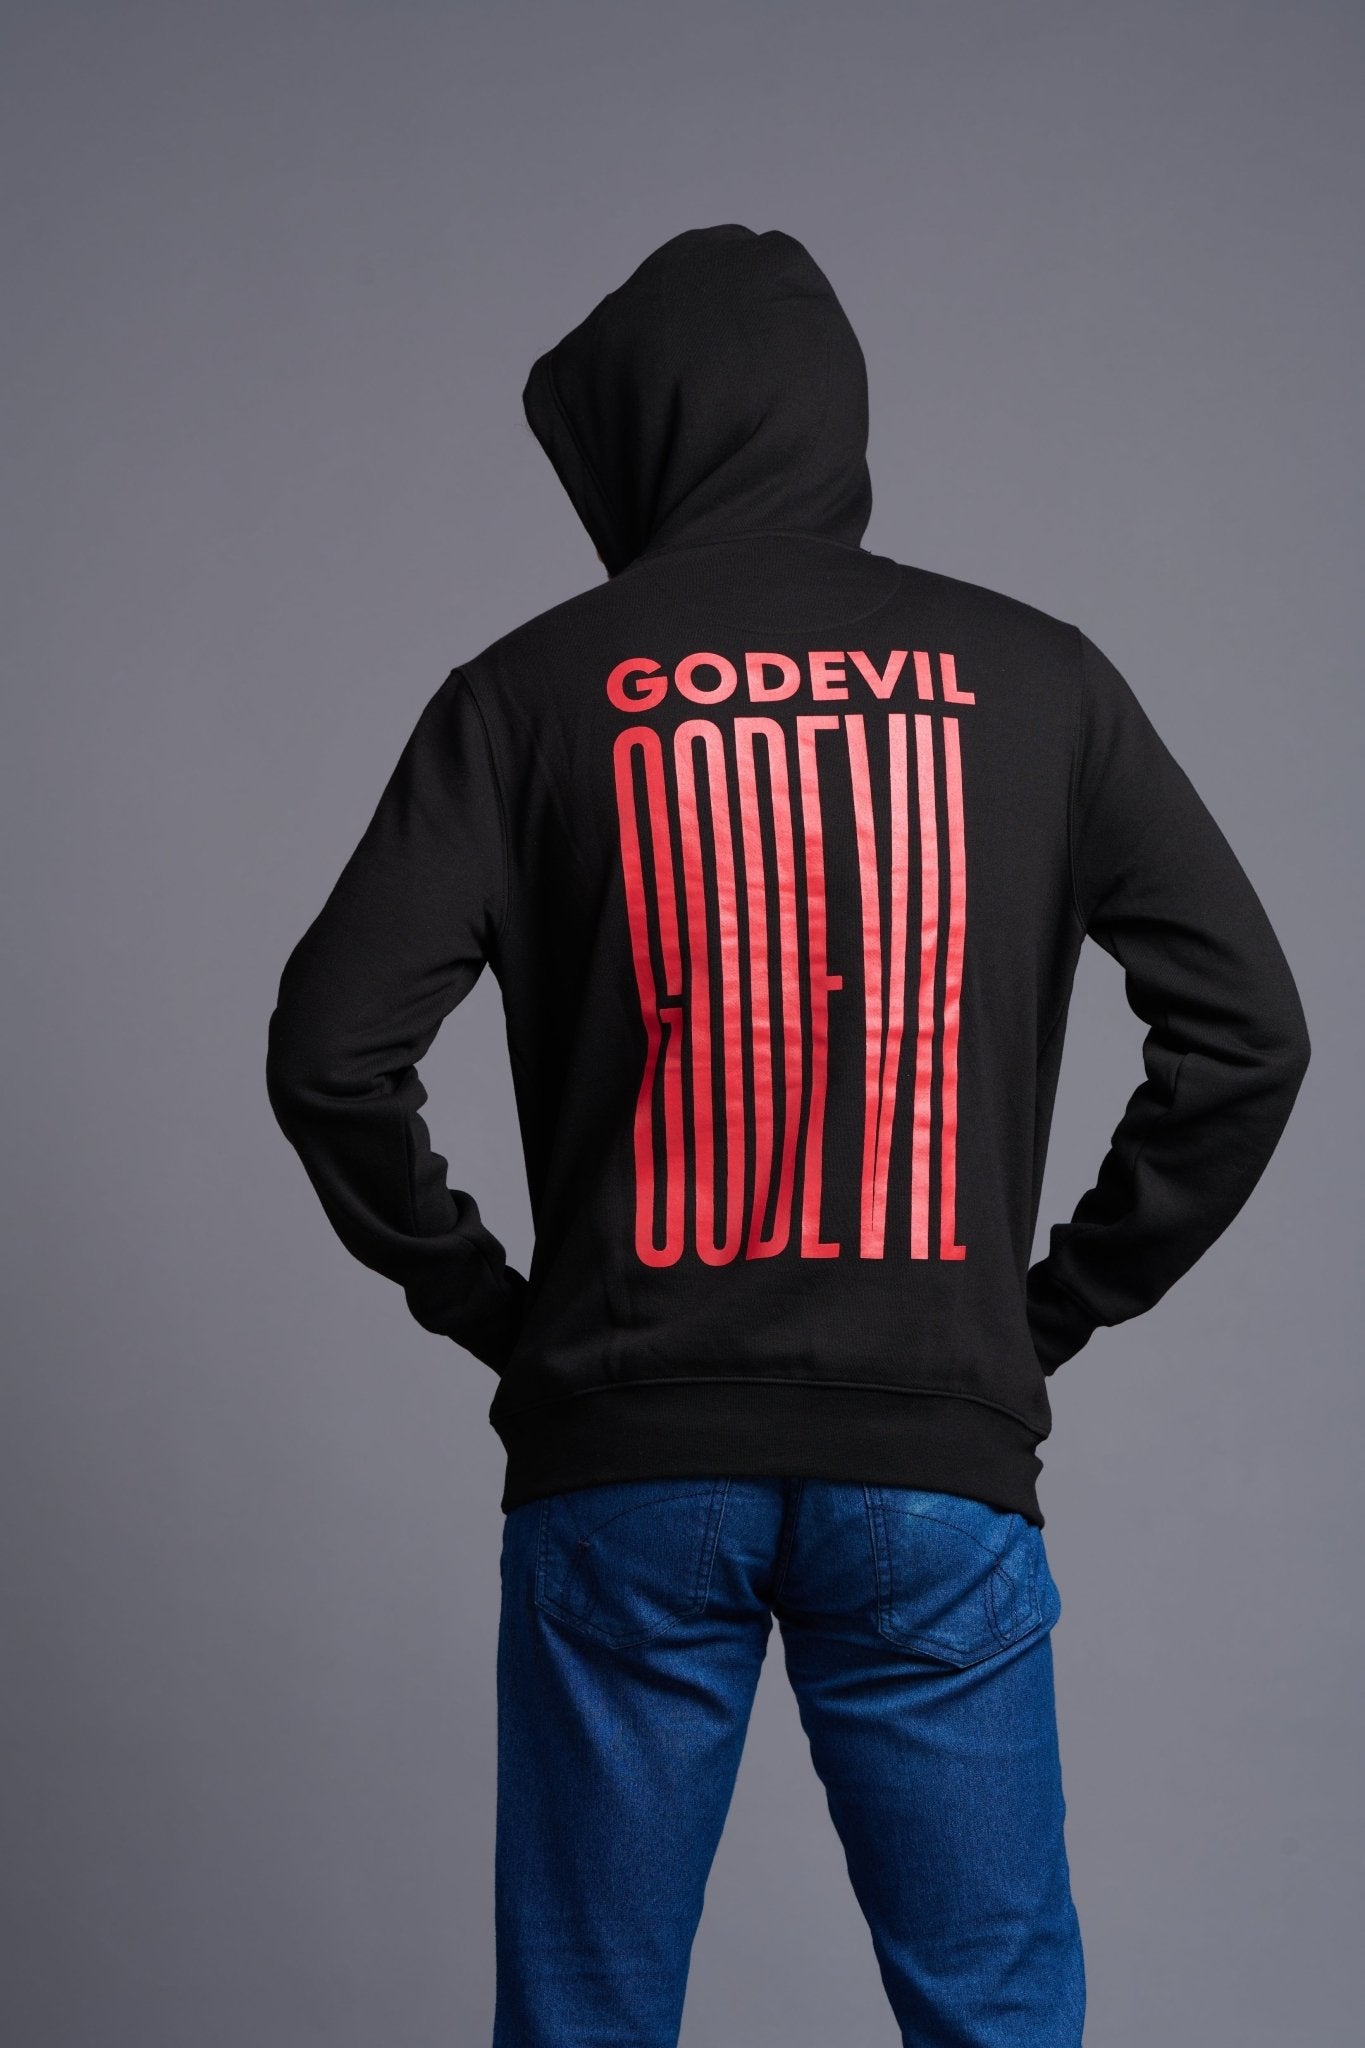 Go Devil in Stretch Font Printed Black Hoodie for Men - Go Devil